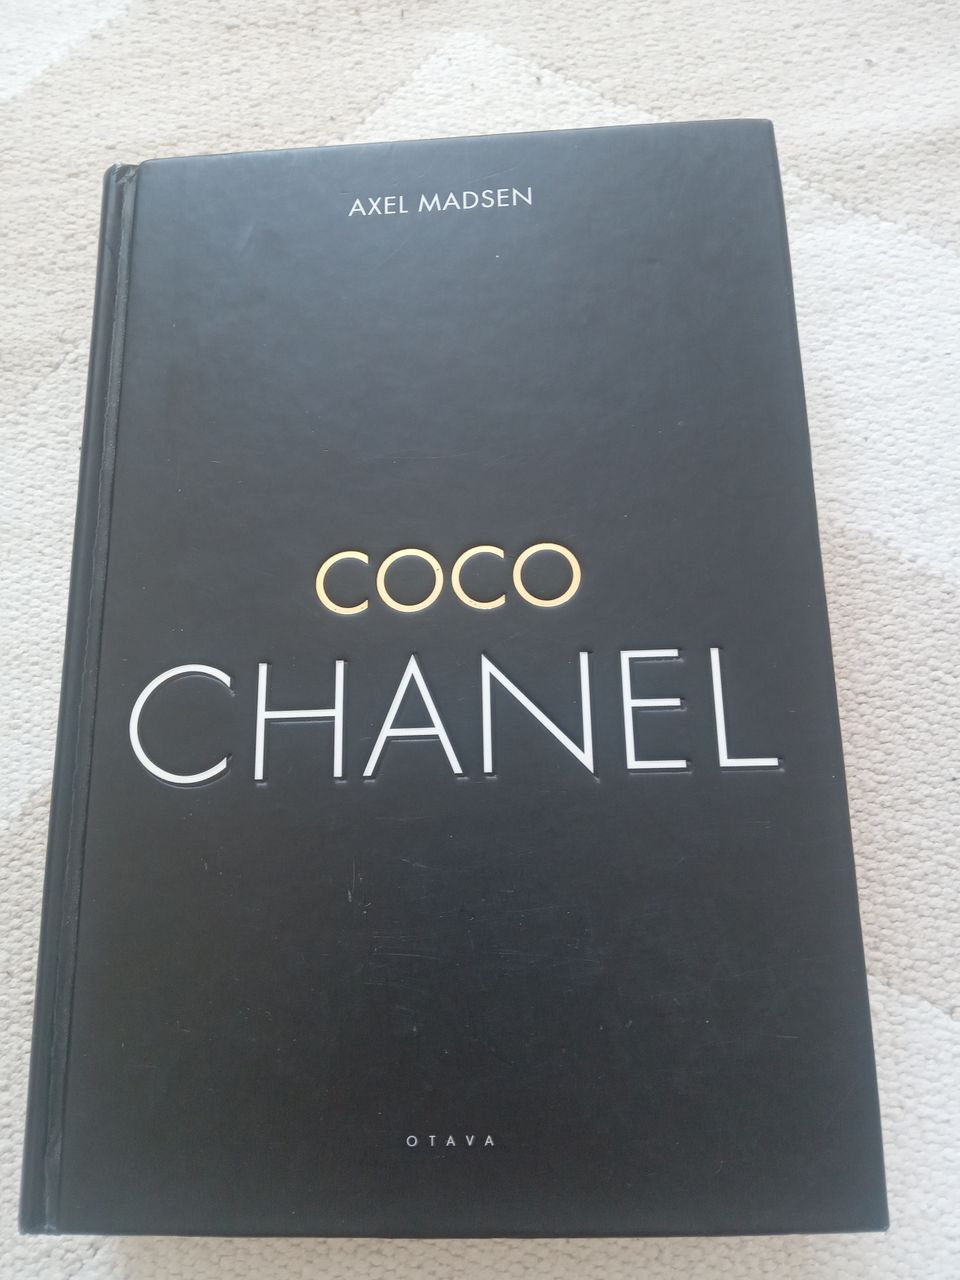 Chanel Axel Madsen kirja 400 sivuinen